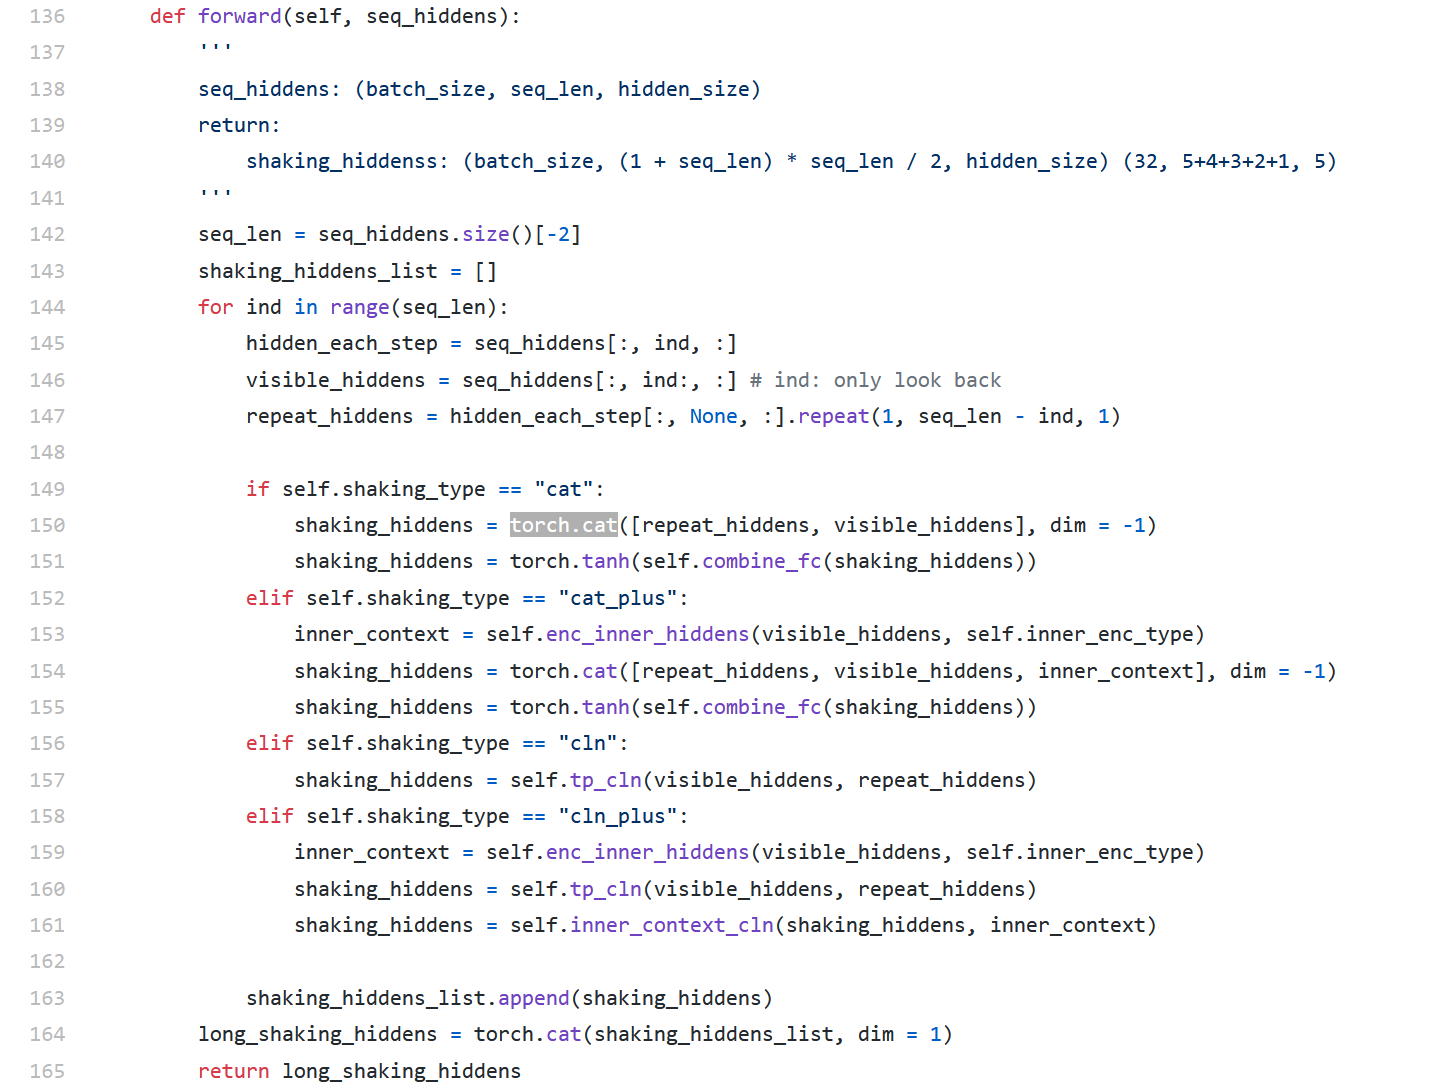 tplink匿名设备_HTML代码在实体化编码后是什么